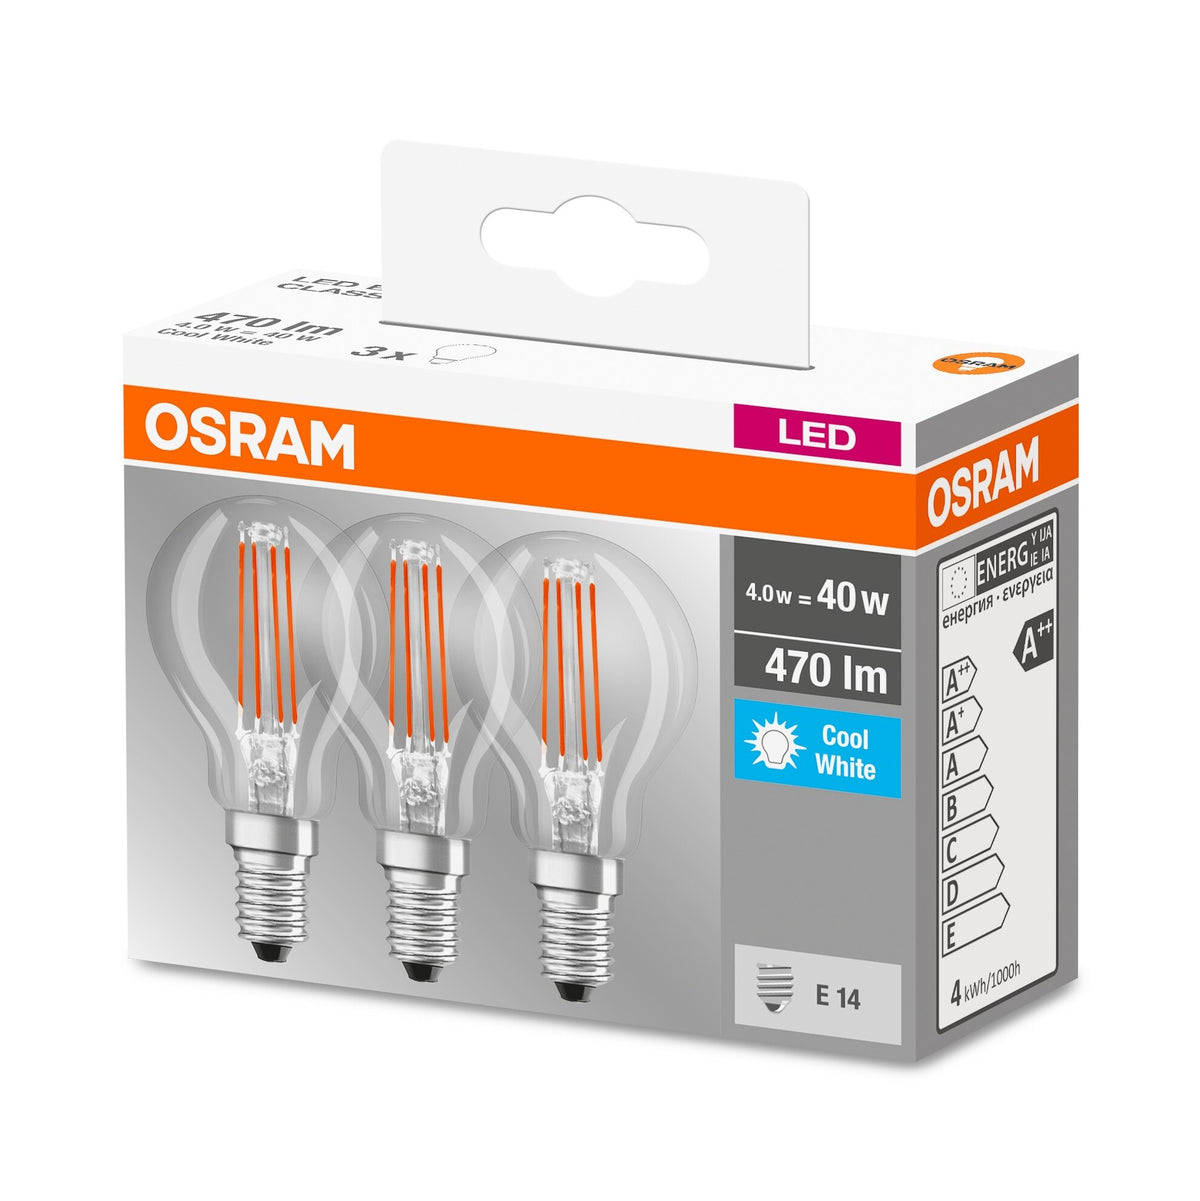 LED žárovka OSRAM BASE, E14, 4W, retro,čirá, neutrální bílá